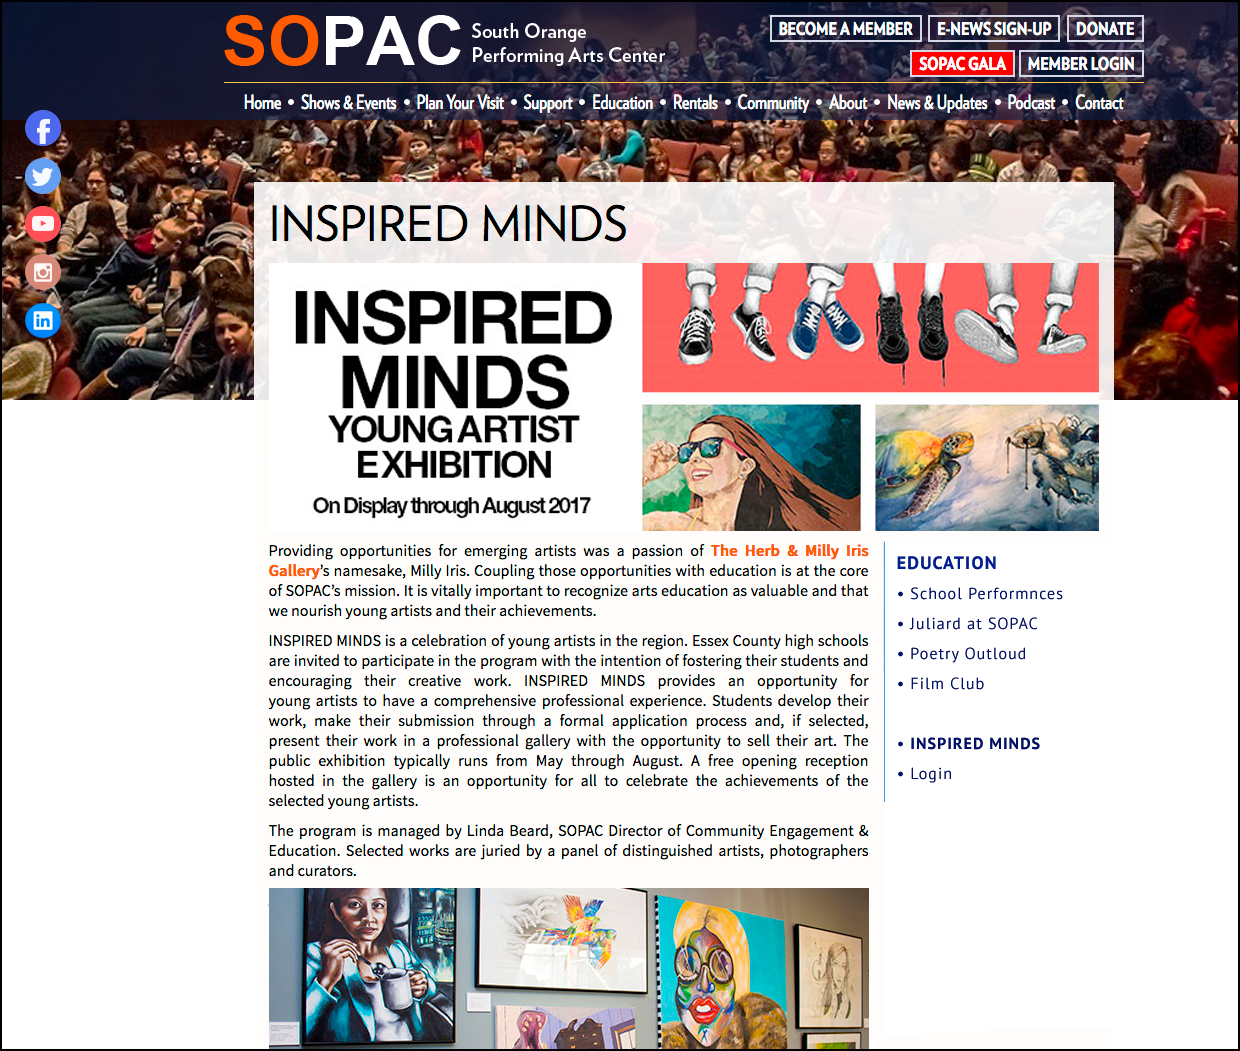 SOPAC - Support, Donations, Membership